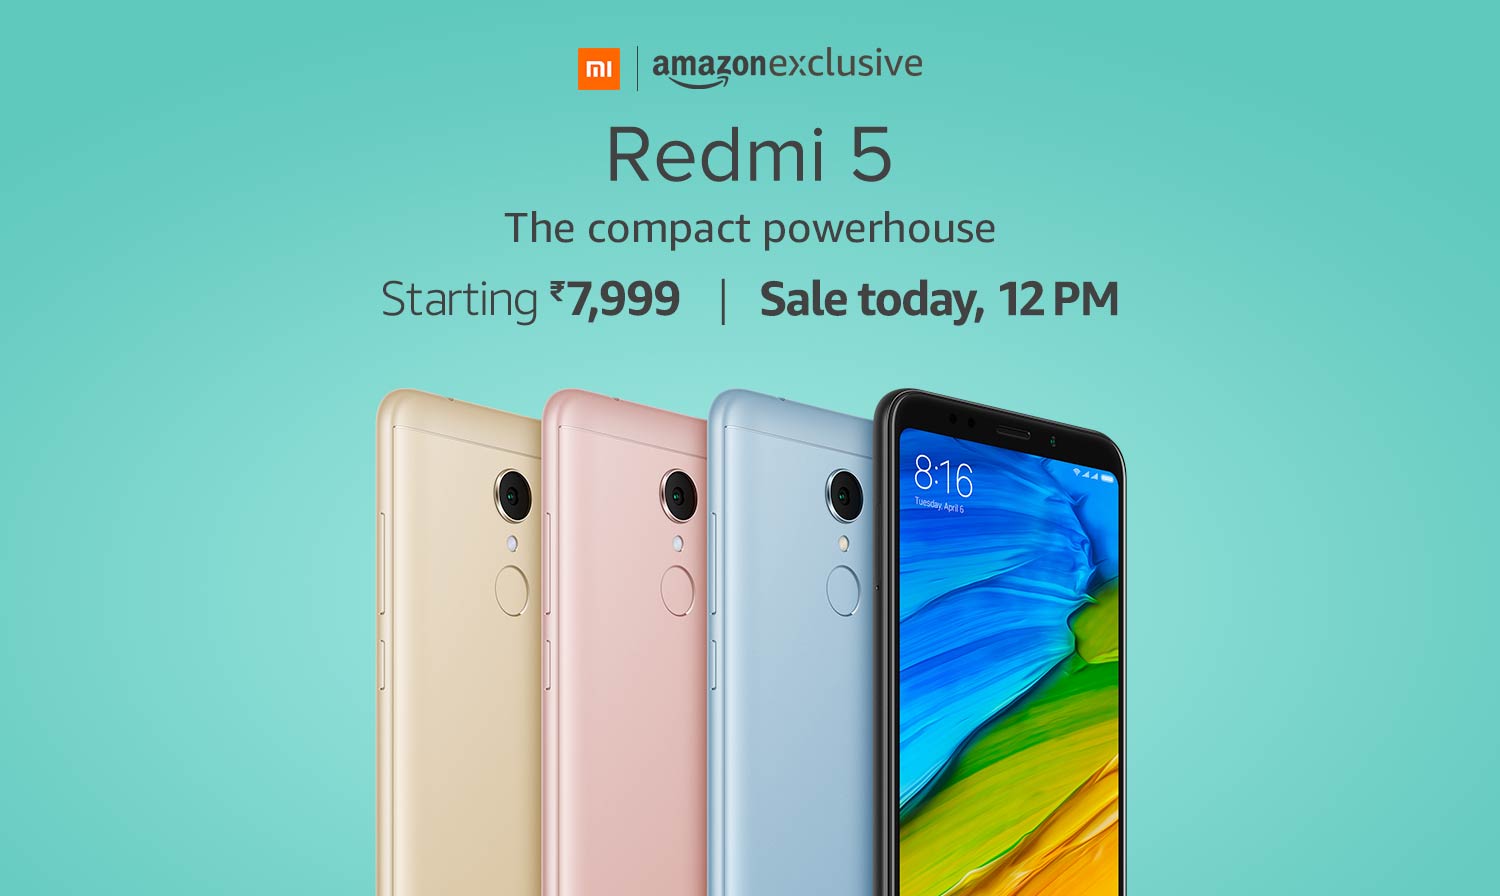 Amazon - Redmi 5 Sale Today 16GB + 2 GB Ram @ Rs.7999 | 32GB + 3GB Ram @ Rs.8999 | 64GB + 4GB Ram @ Rs.109999